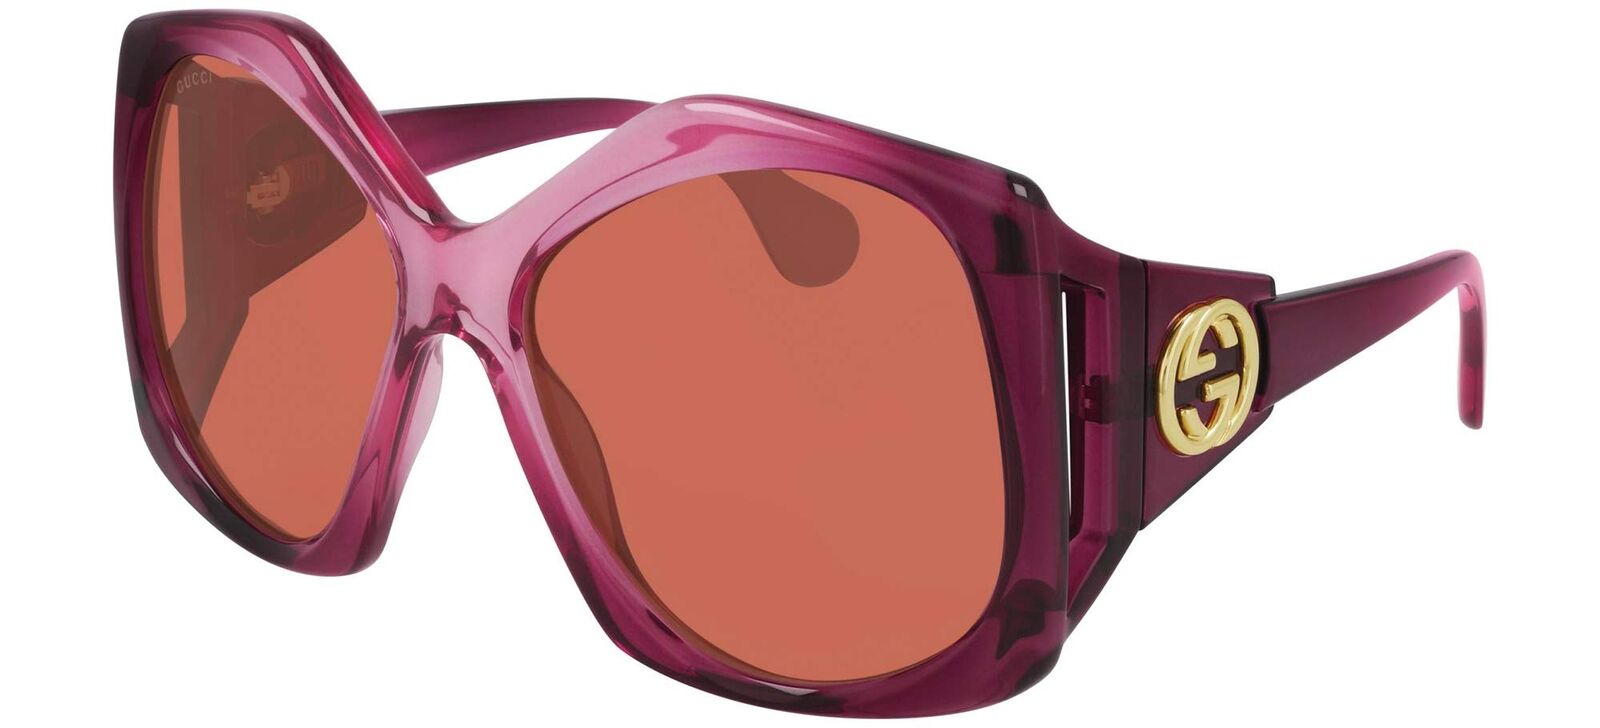 Gucci GG0875S-003-62 mm Oversized Geometric Sunglasses Burgundy/Nude Pink/Orange